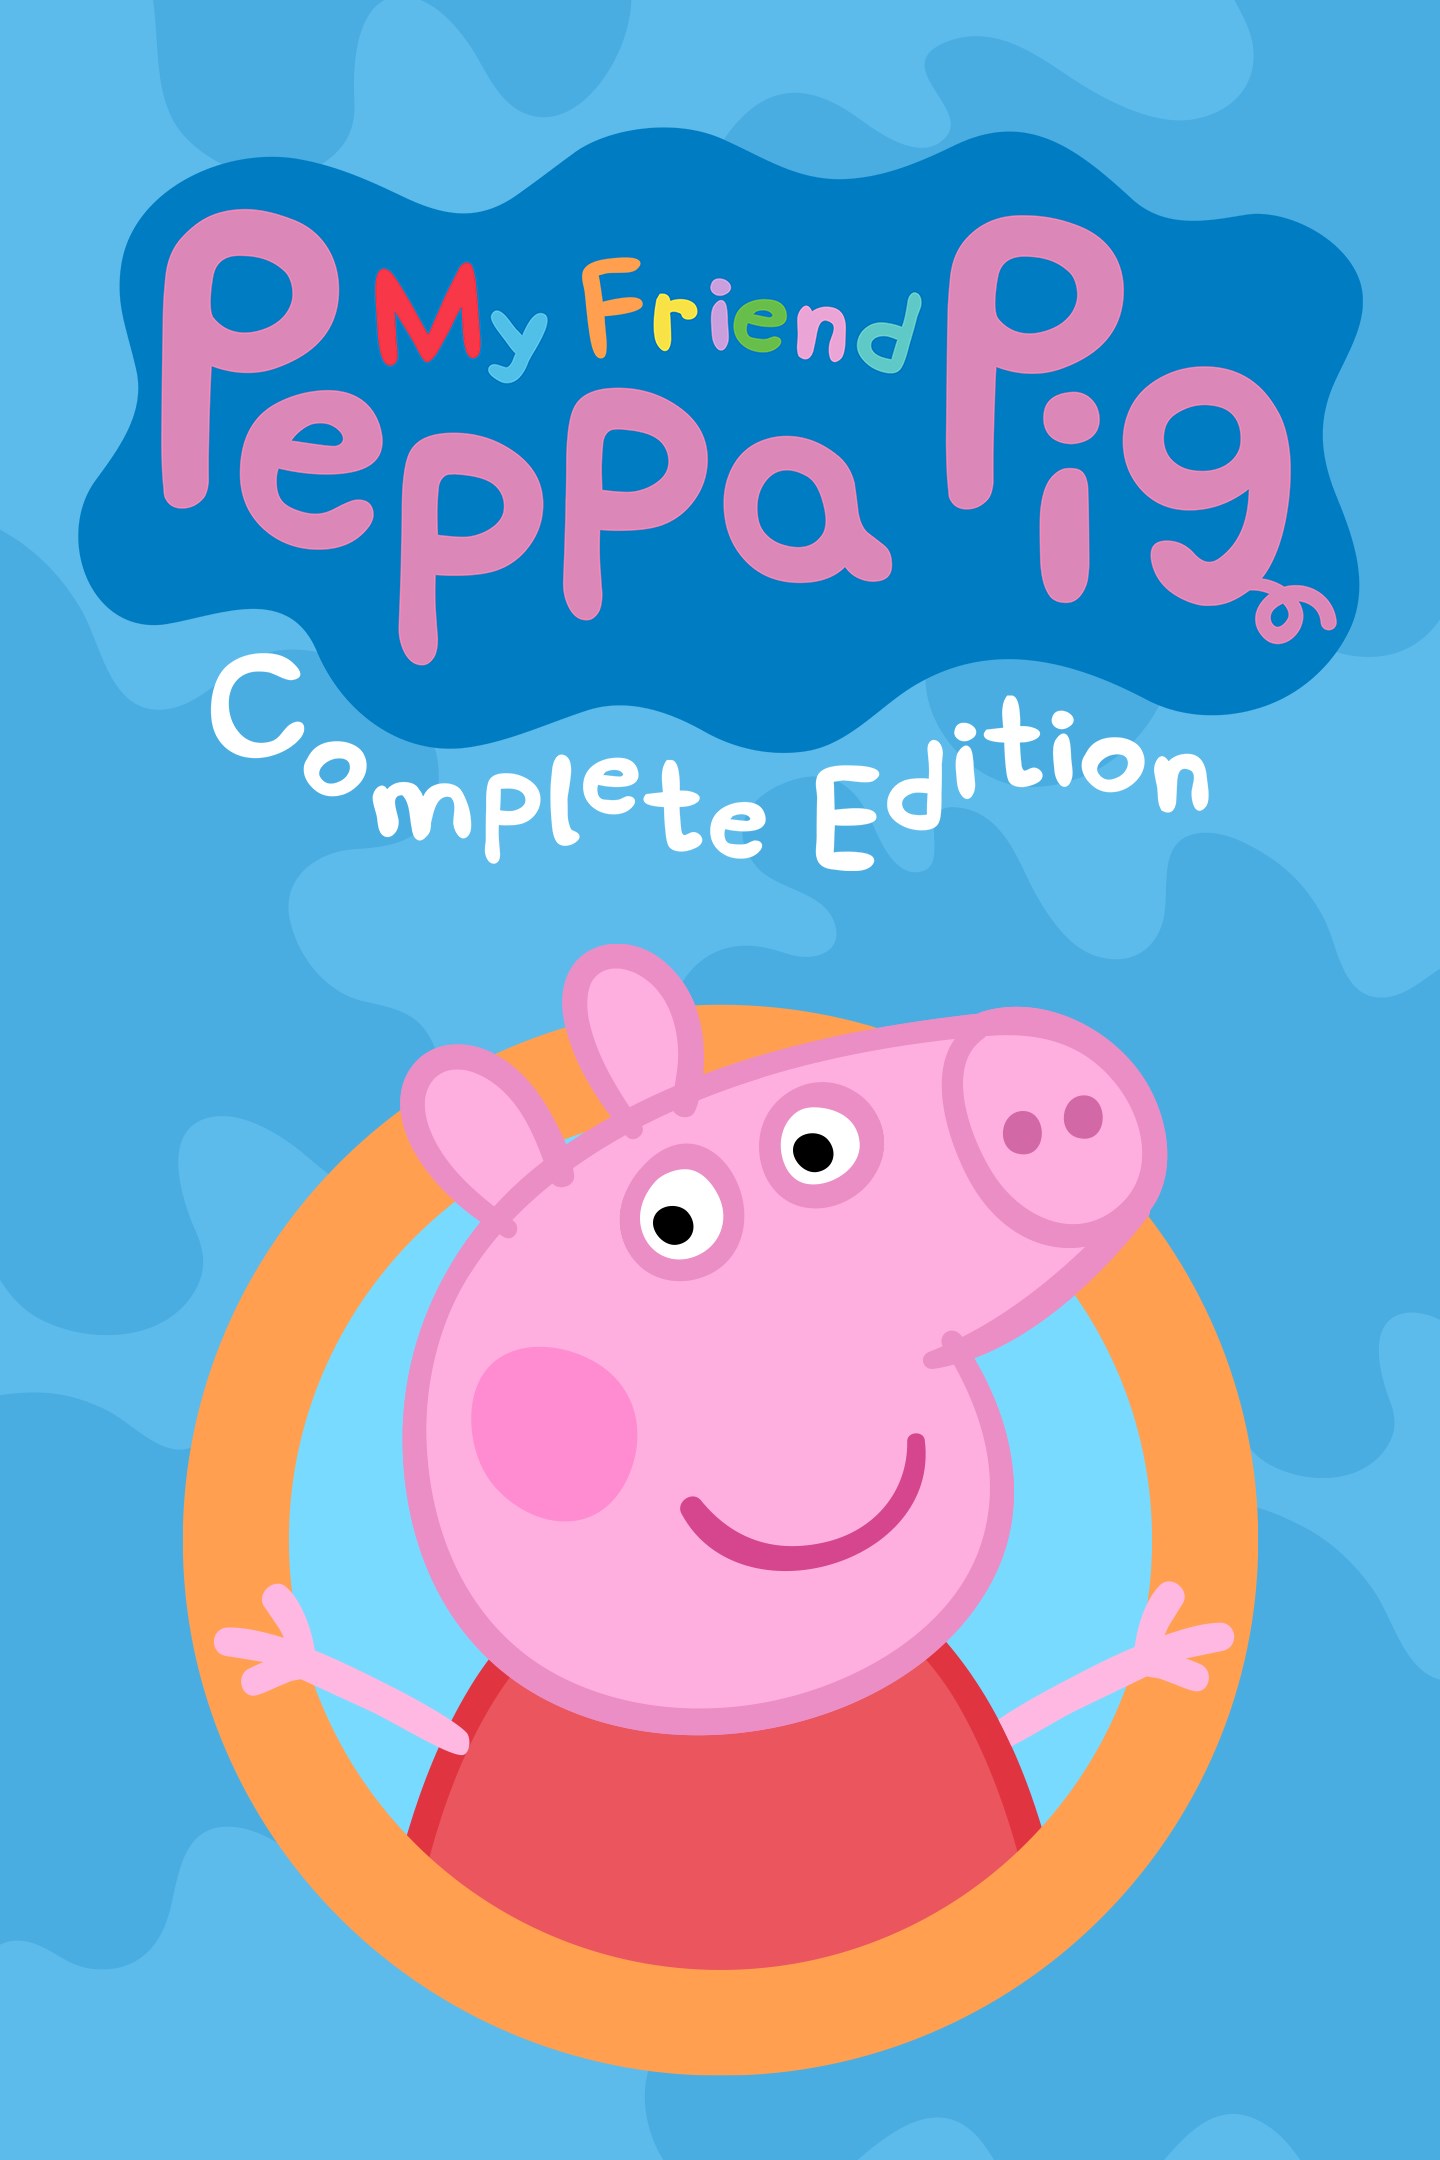 My Friend Peppa Pig - Complete Edition boxshot